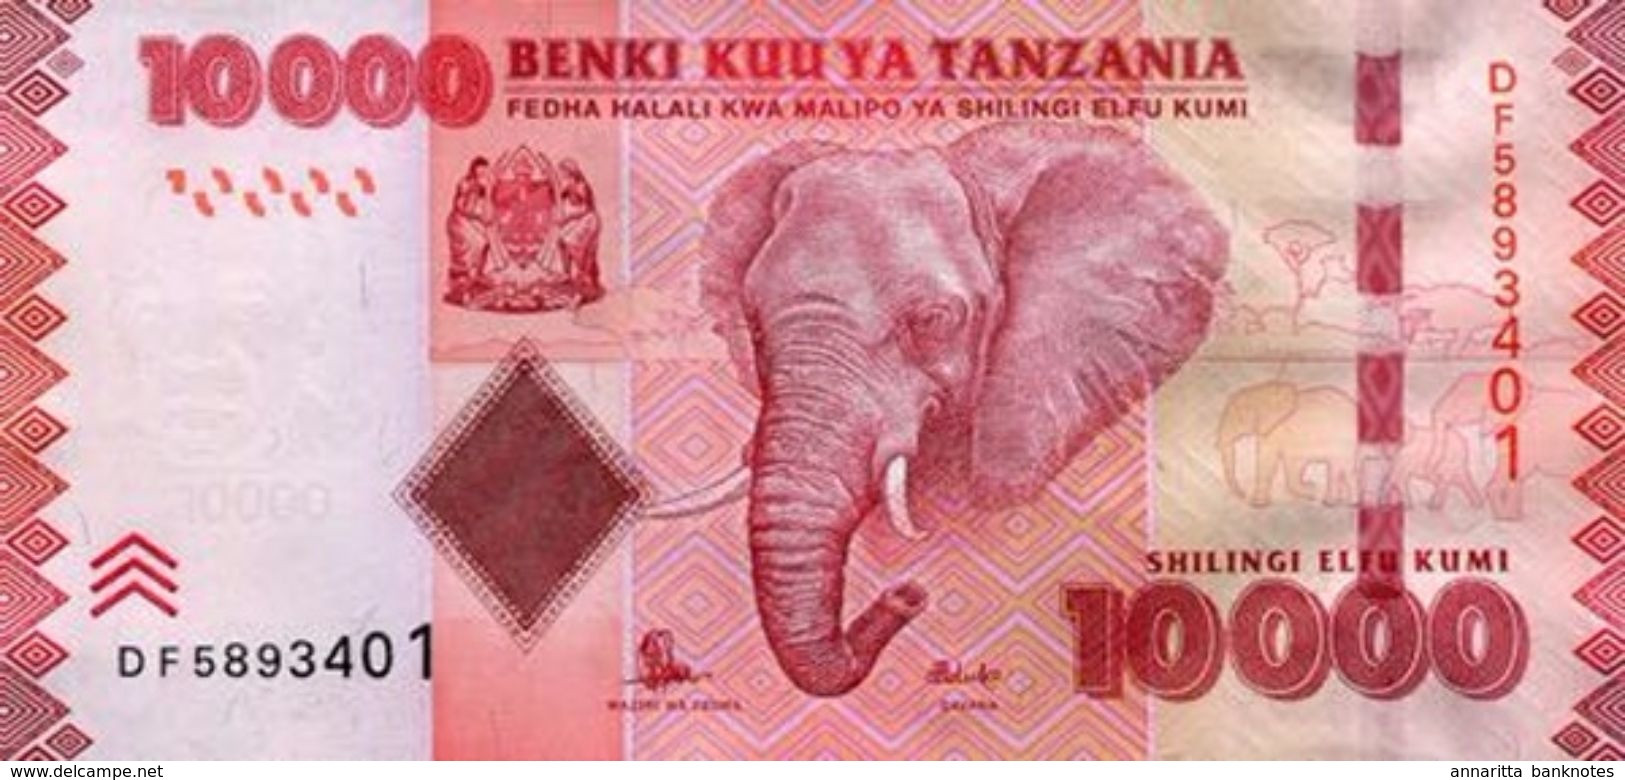 Tanzania (BOT) 10000 Shillings ND (2015) UNC Cat No. P-44b / TZ143b - Tanzania